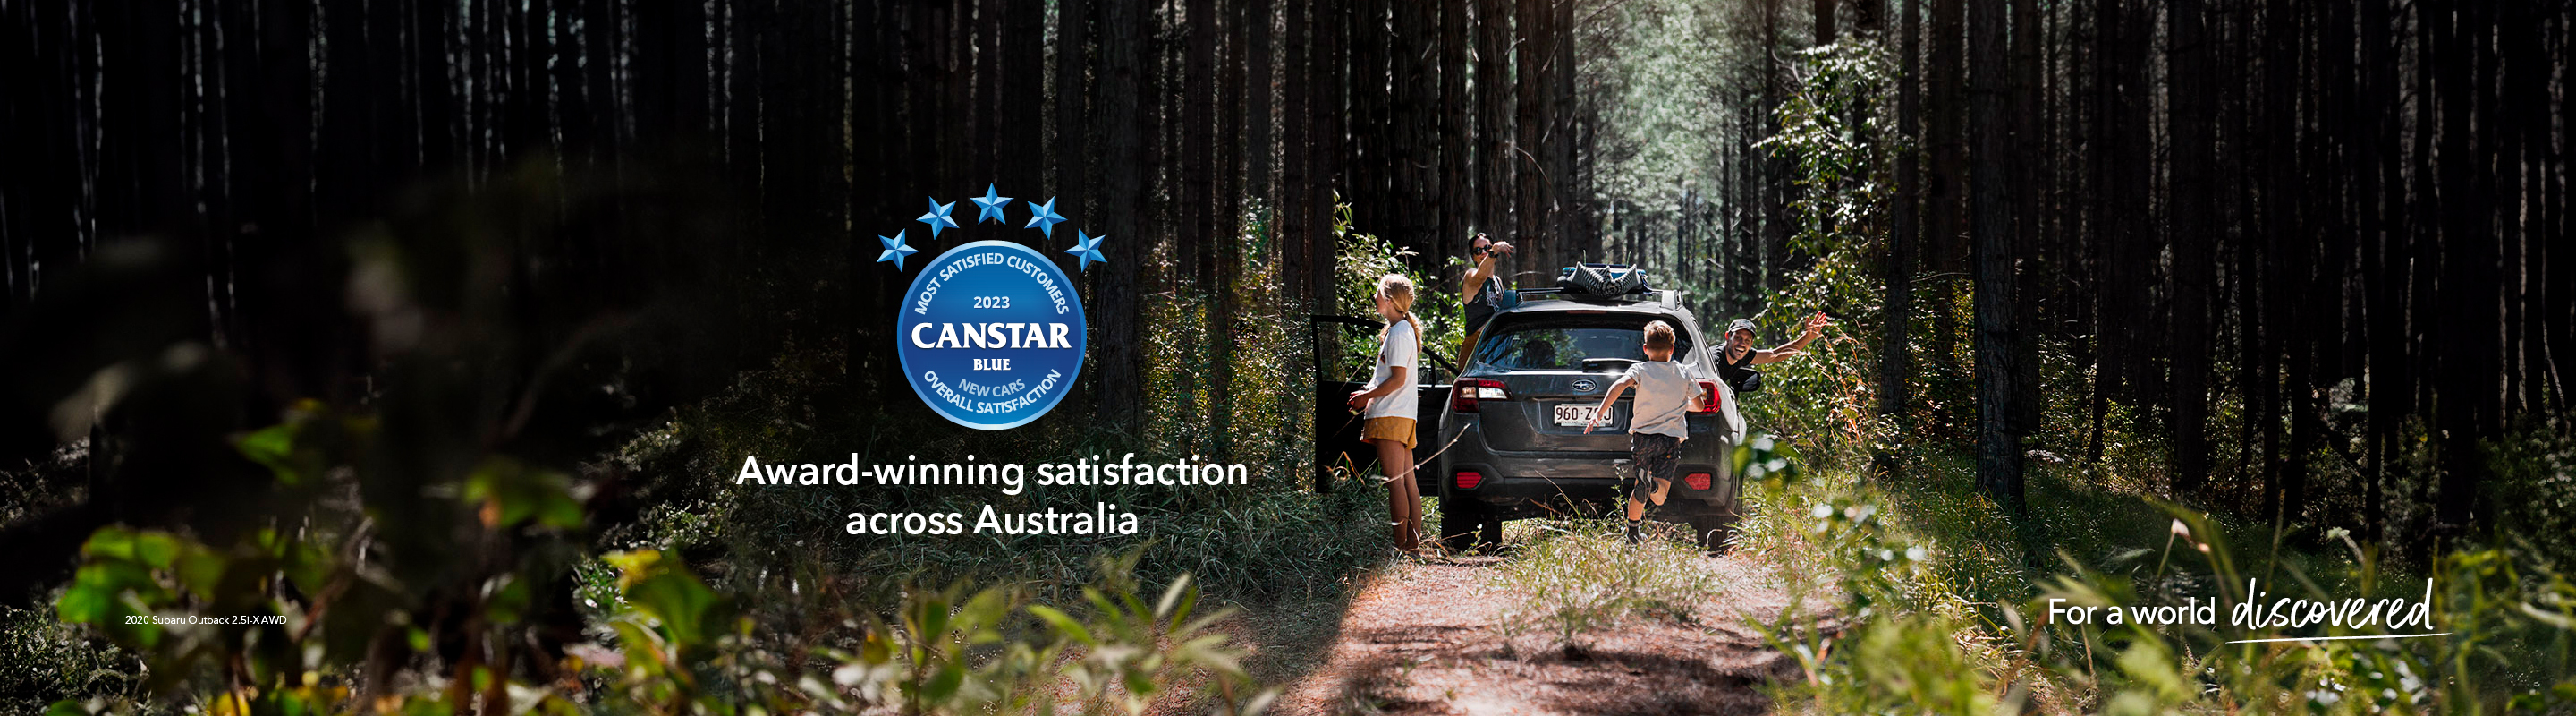 Subaru earns Canstar Blue award for highest customer satisfaction | Subaru Australia